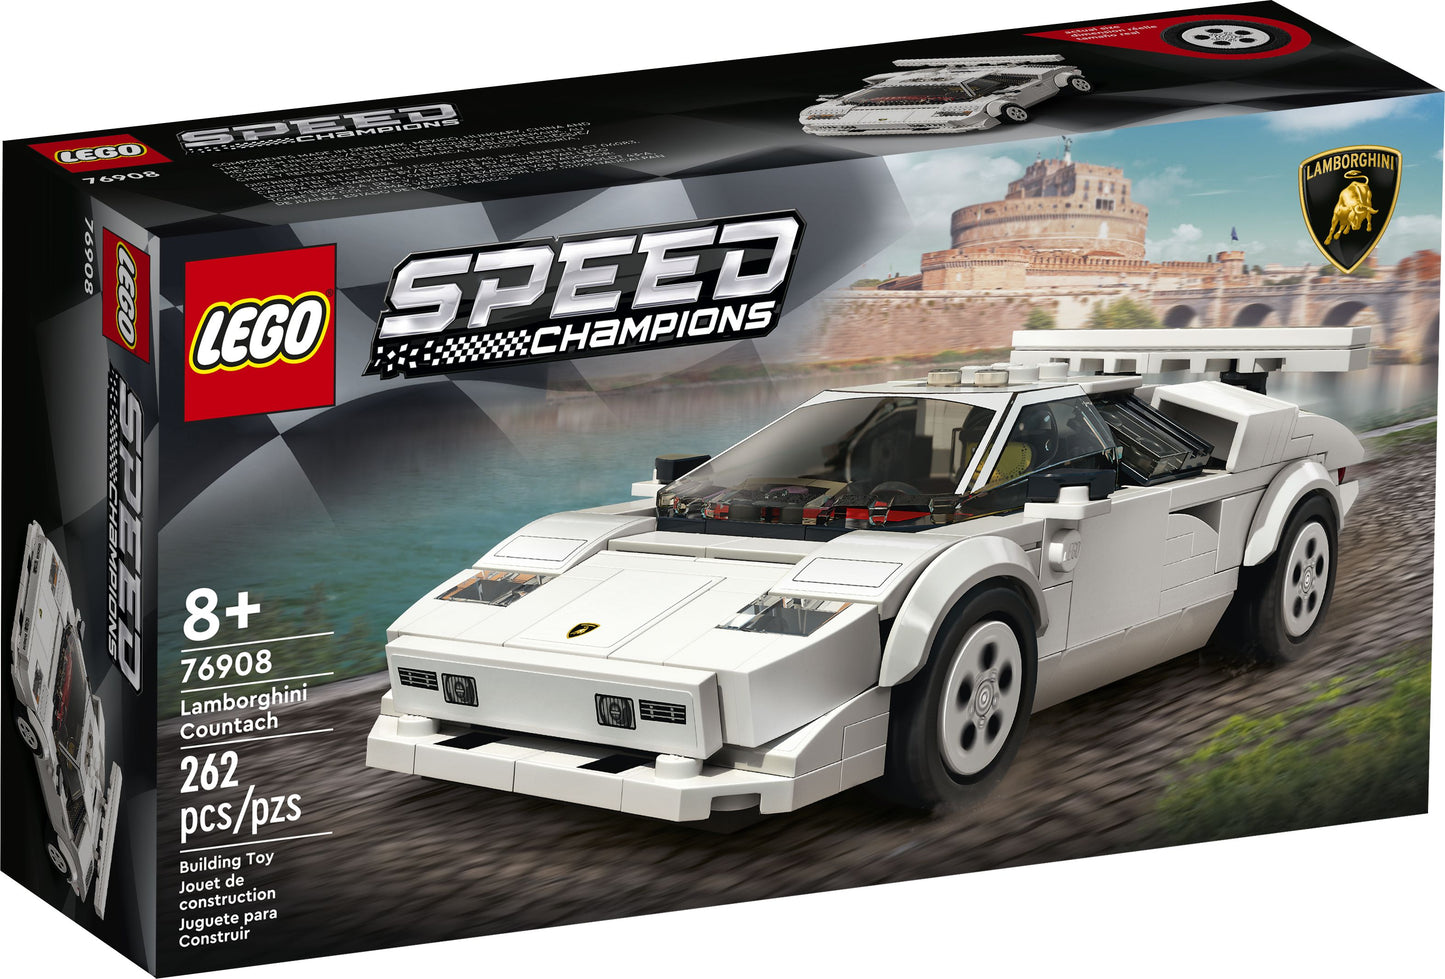 Speed Champions 76908 Lamborghini Countach